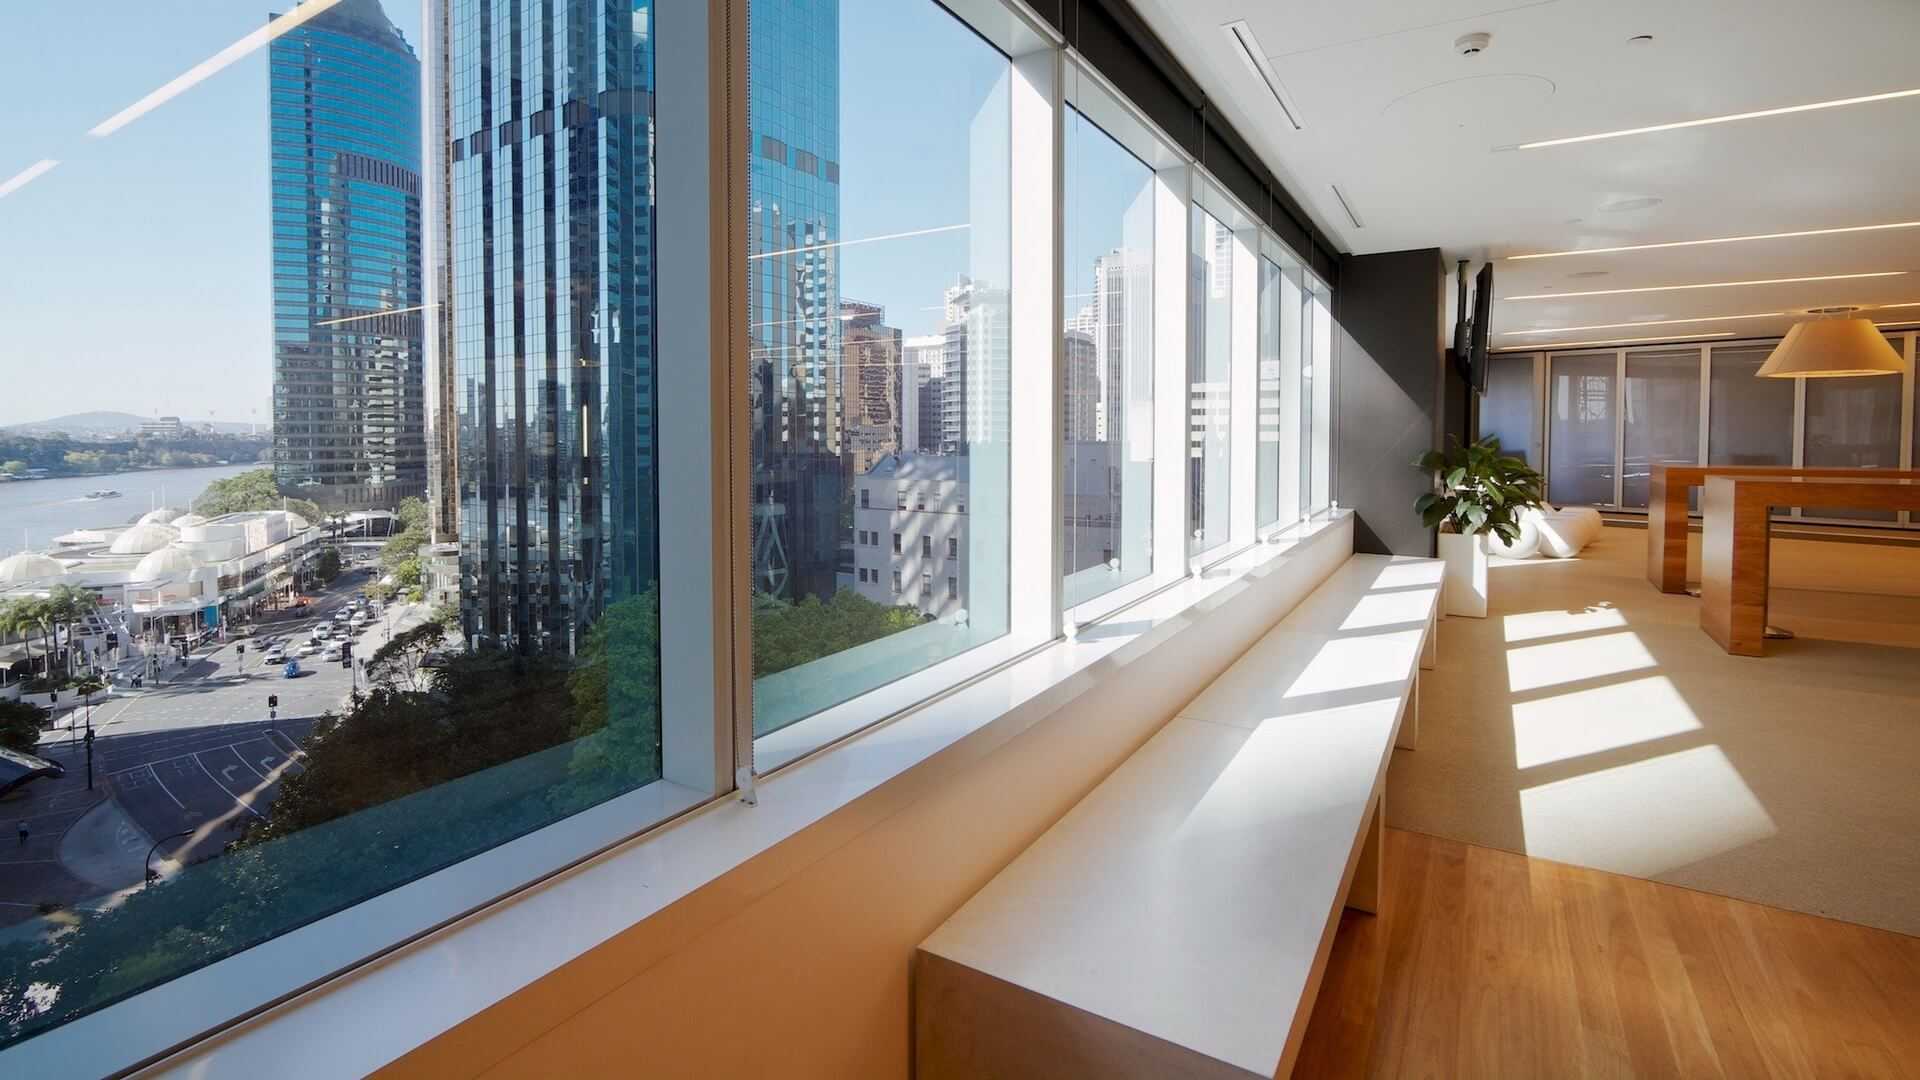 Glazing in PVC window design